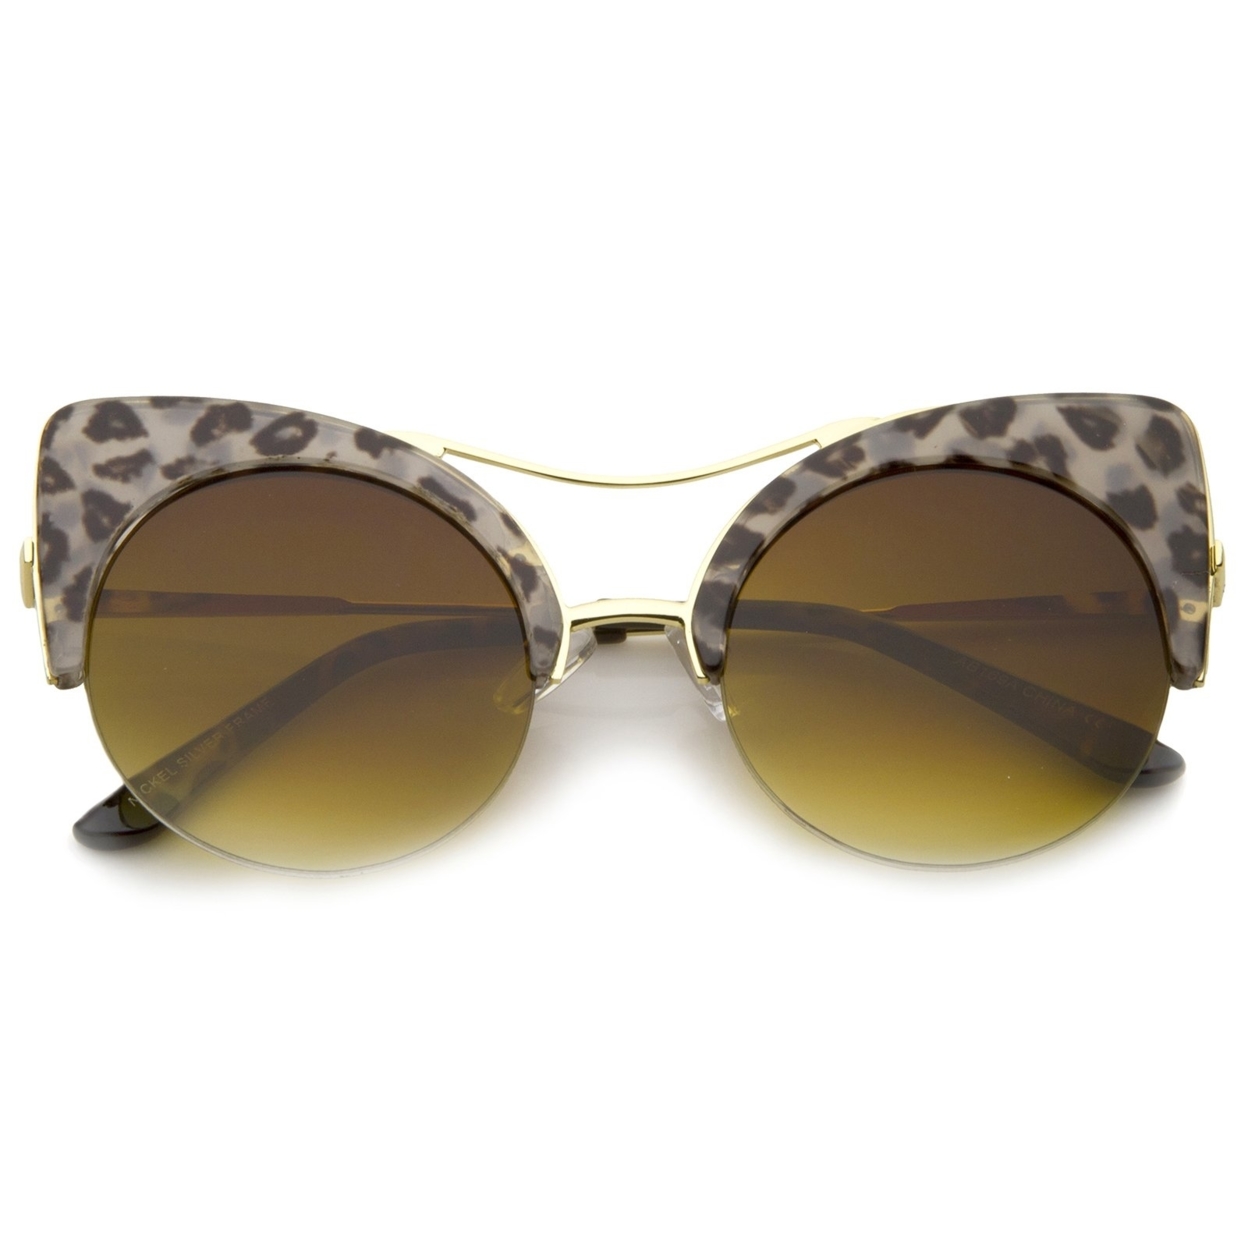 Women's Half-frame High Pointed Flat Lens Round Cat Eye Sunglasses 51mm - Tortoise / Amber